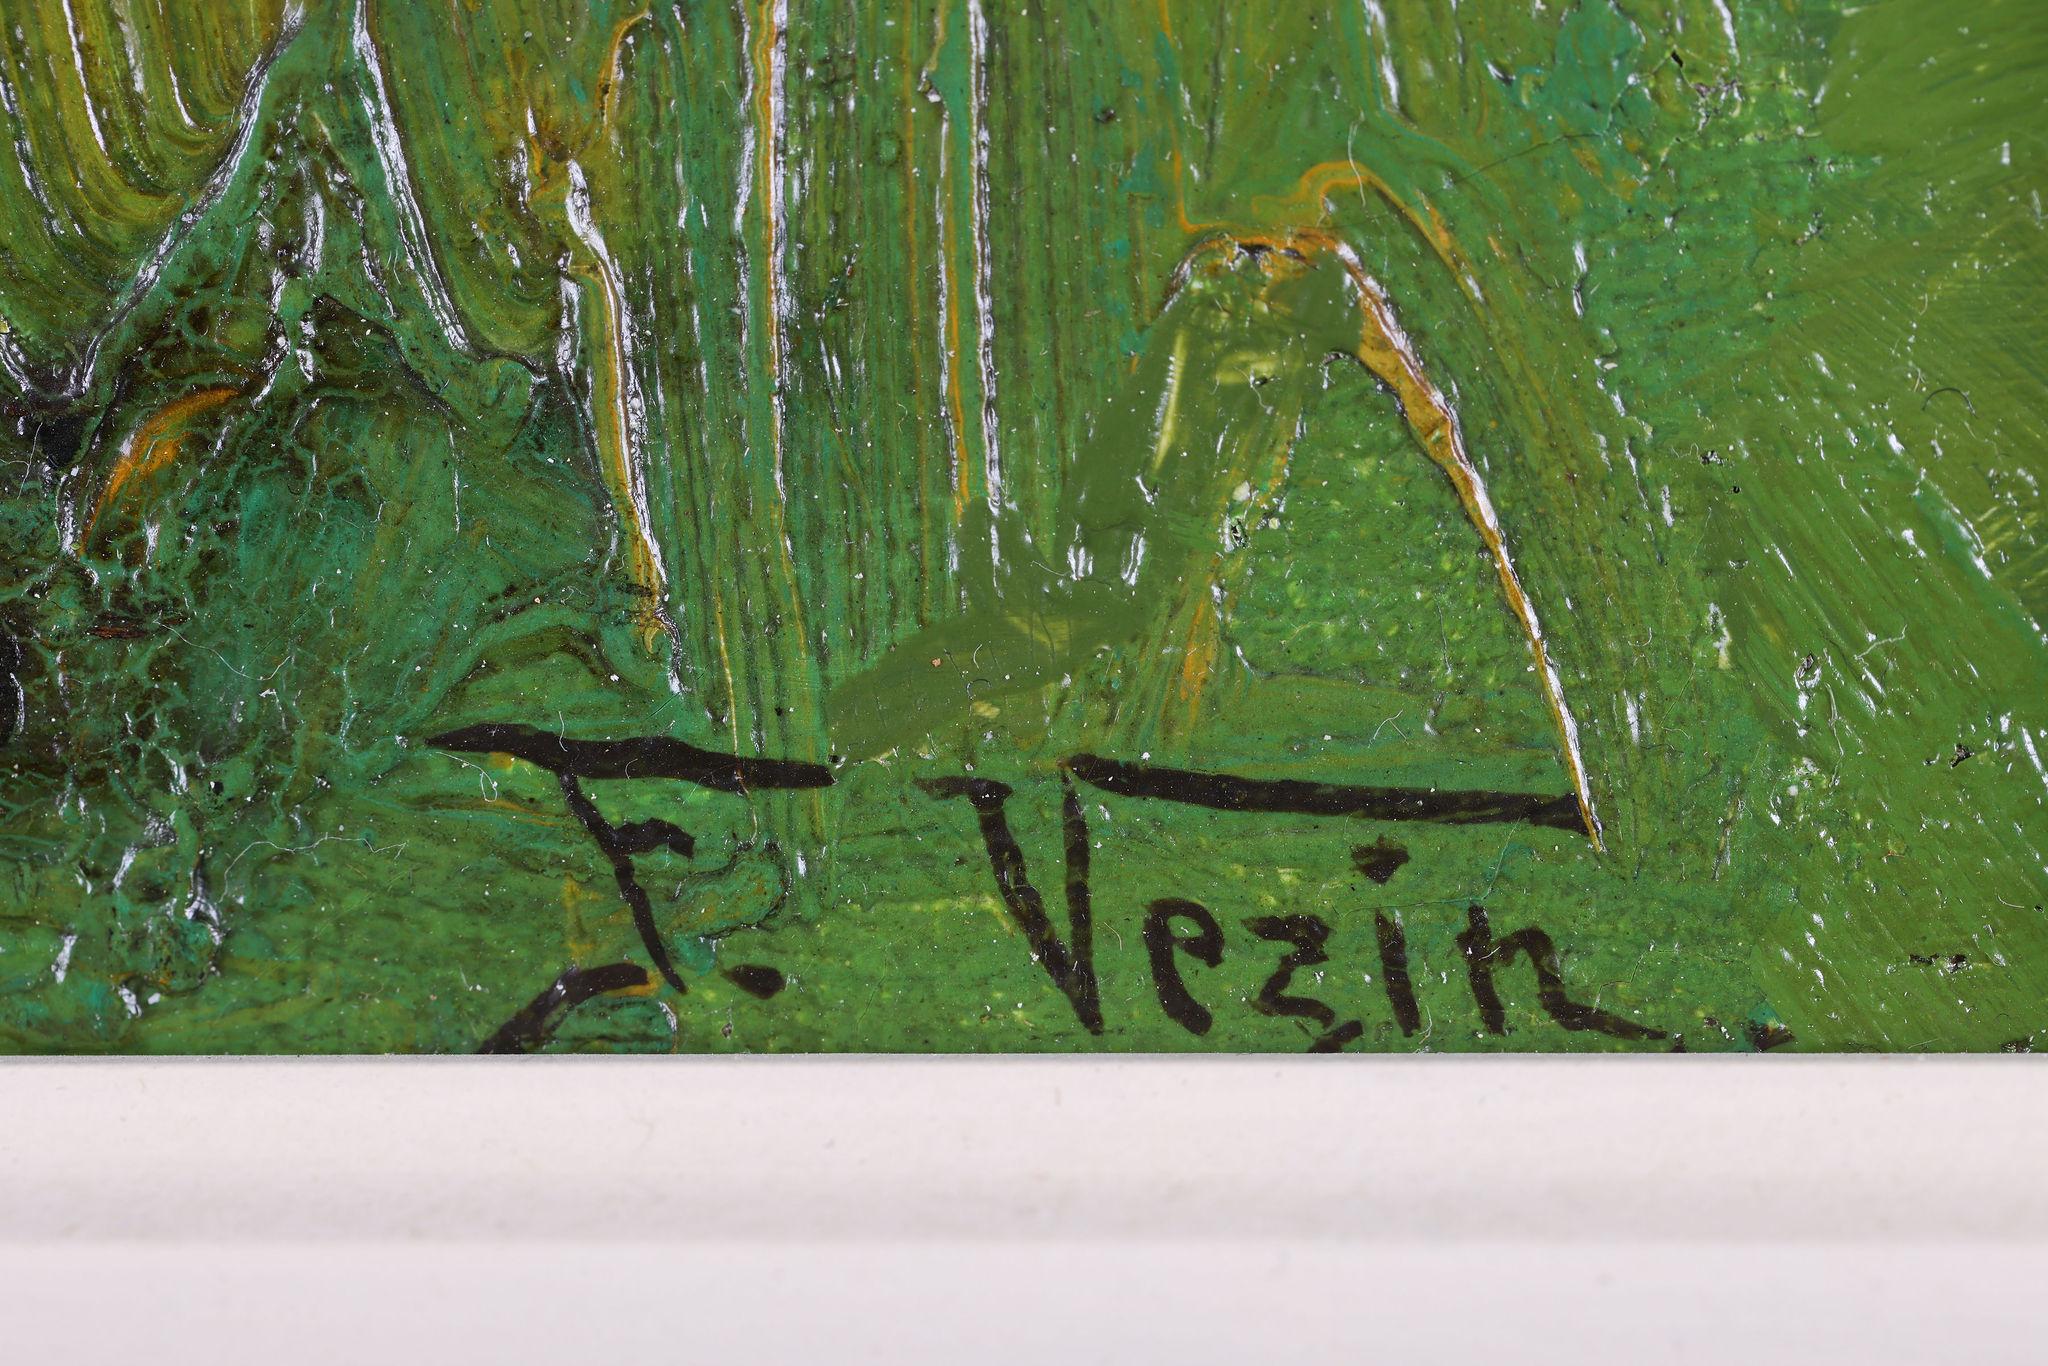 Frederick Vezin 1859 - 1933
Canvas Size: 13 x 18